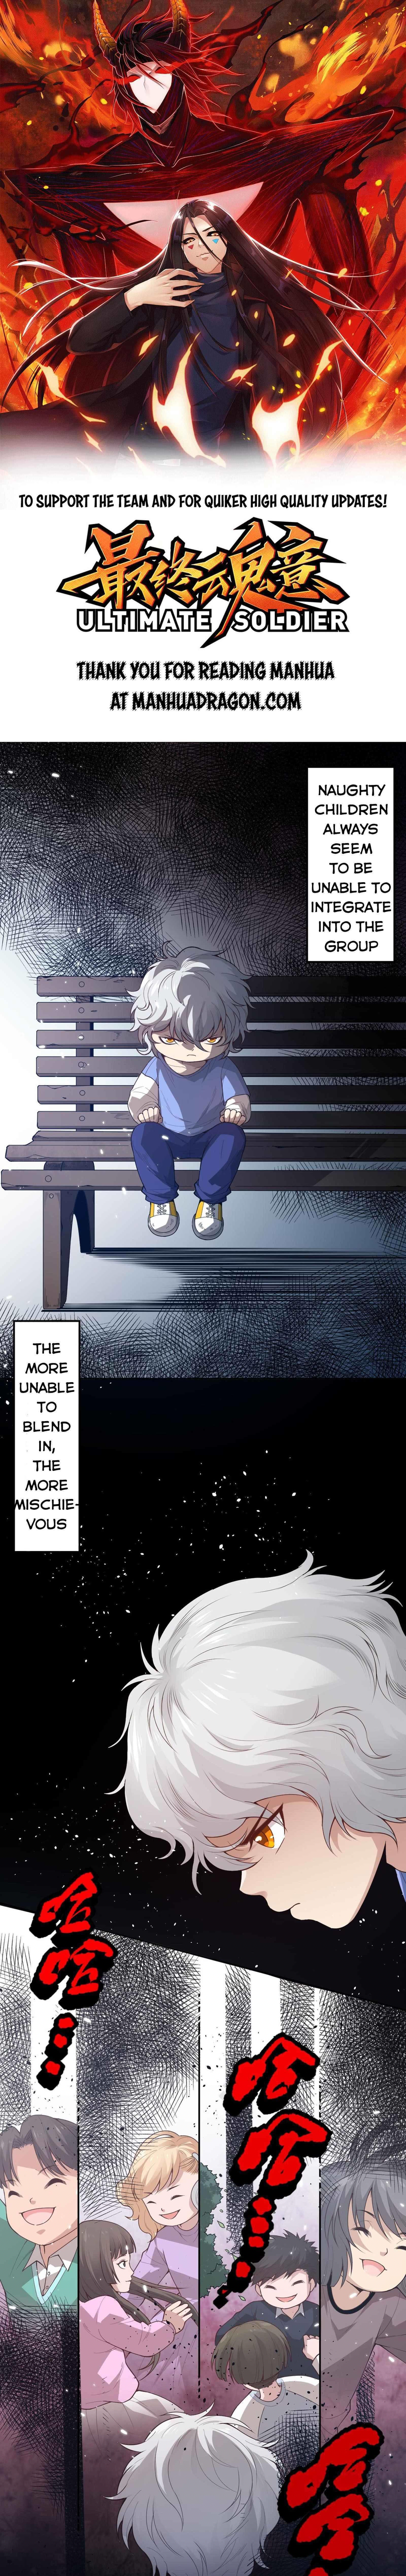 Ultimate Soldier Chapter 135 page 1 - Mangakakalot